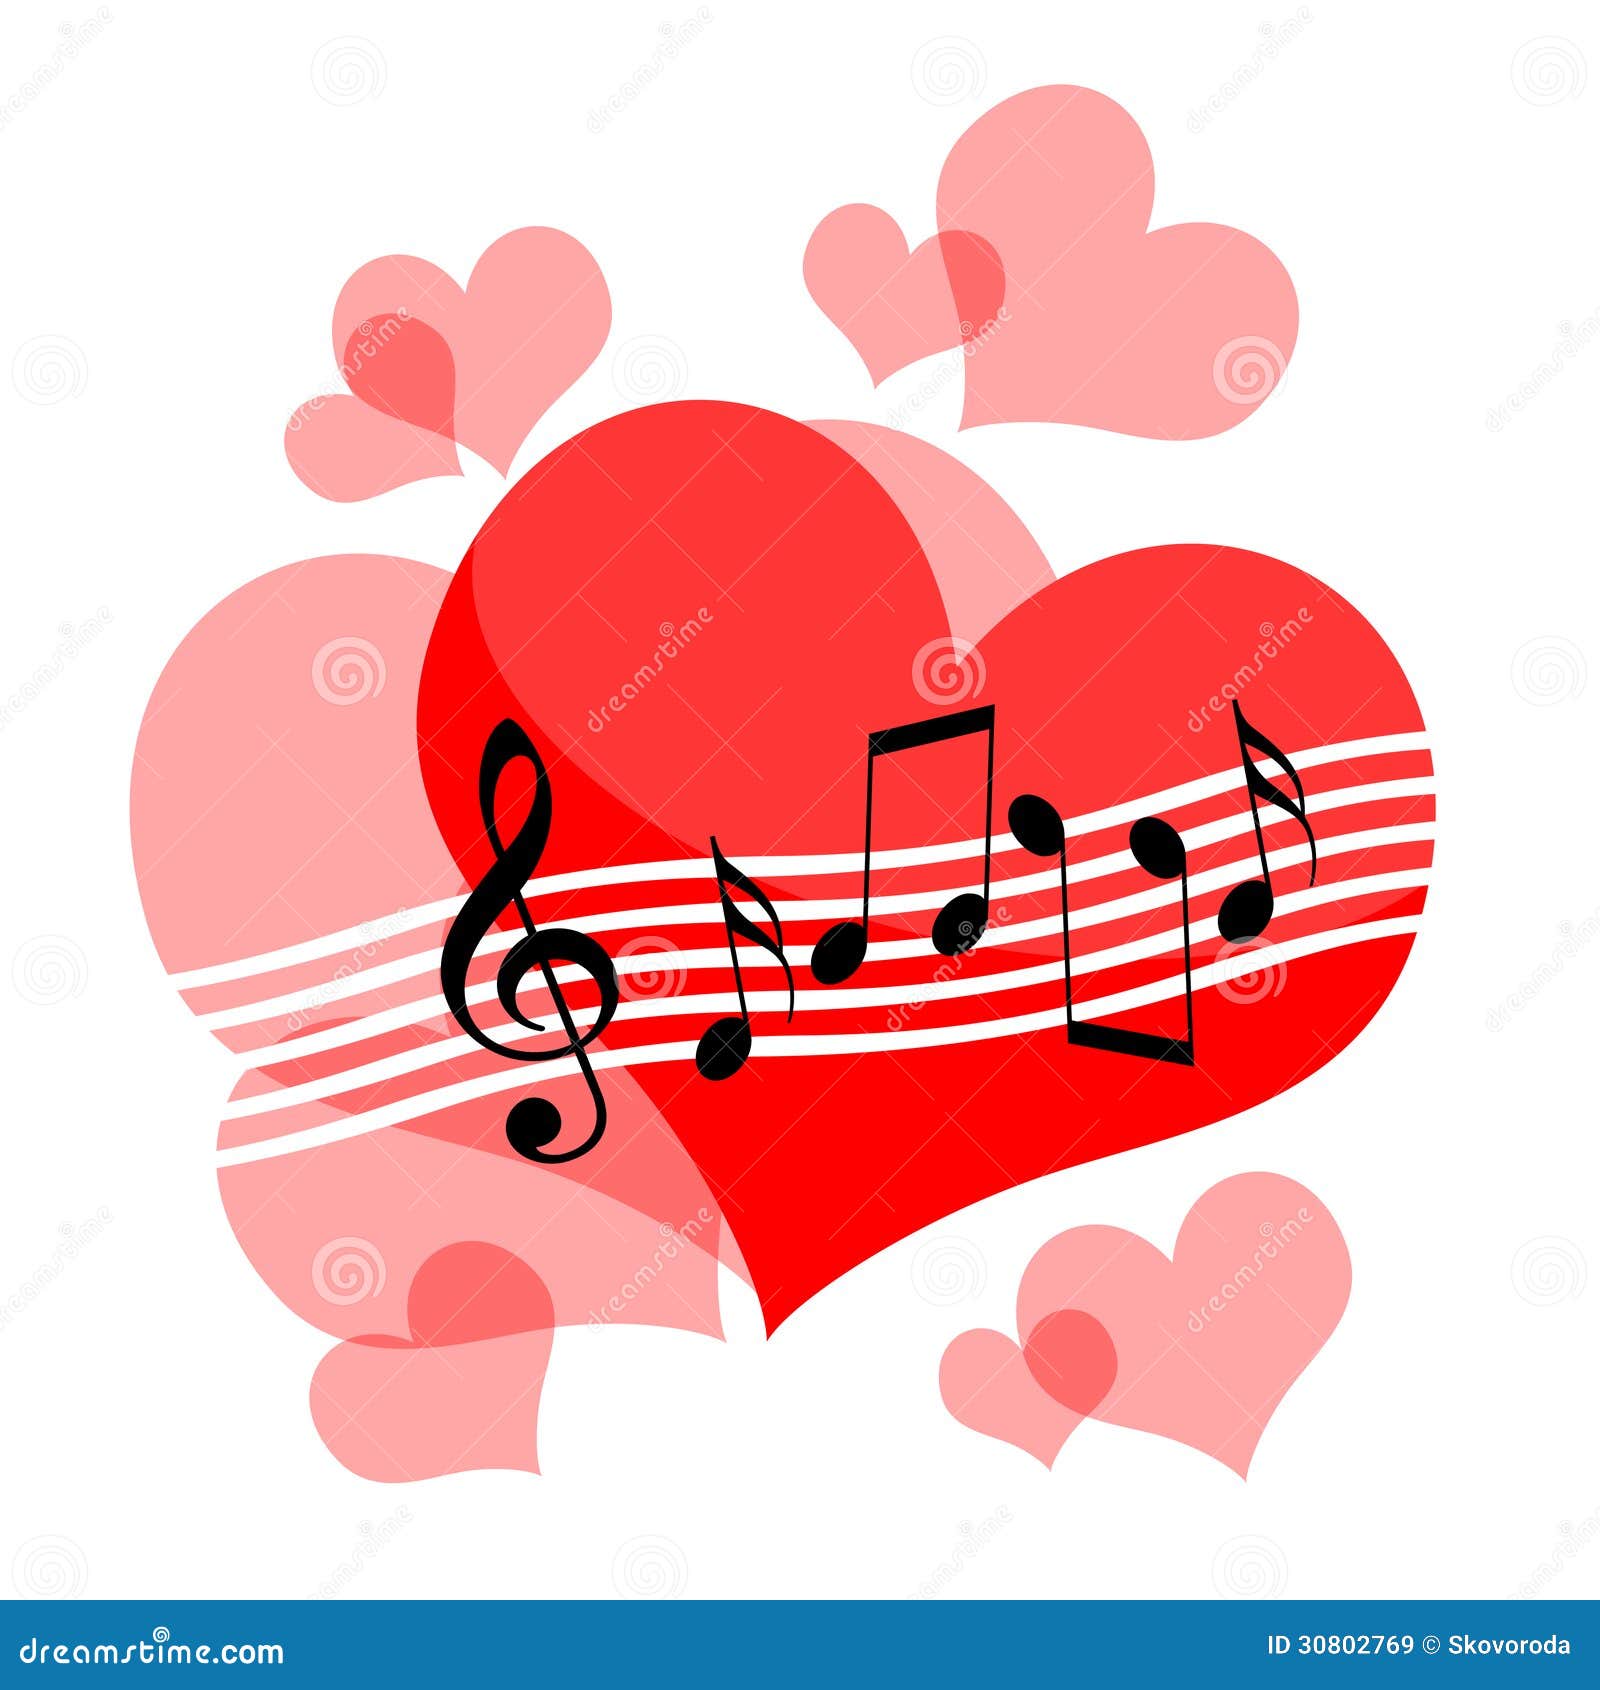 Love music stock illustration. Illustration of celebrate ...